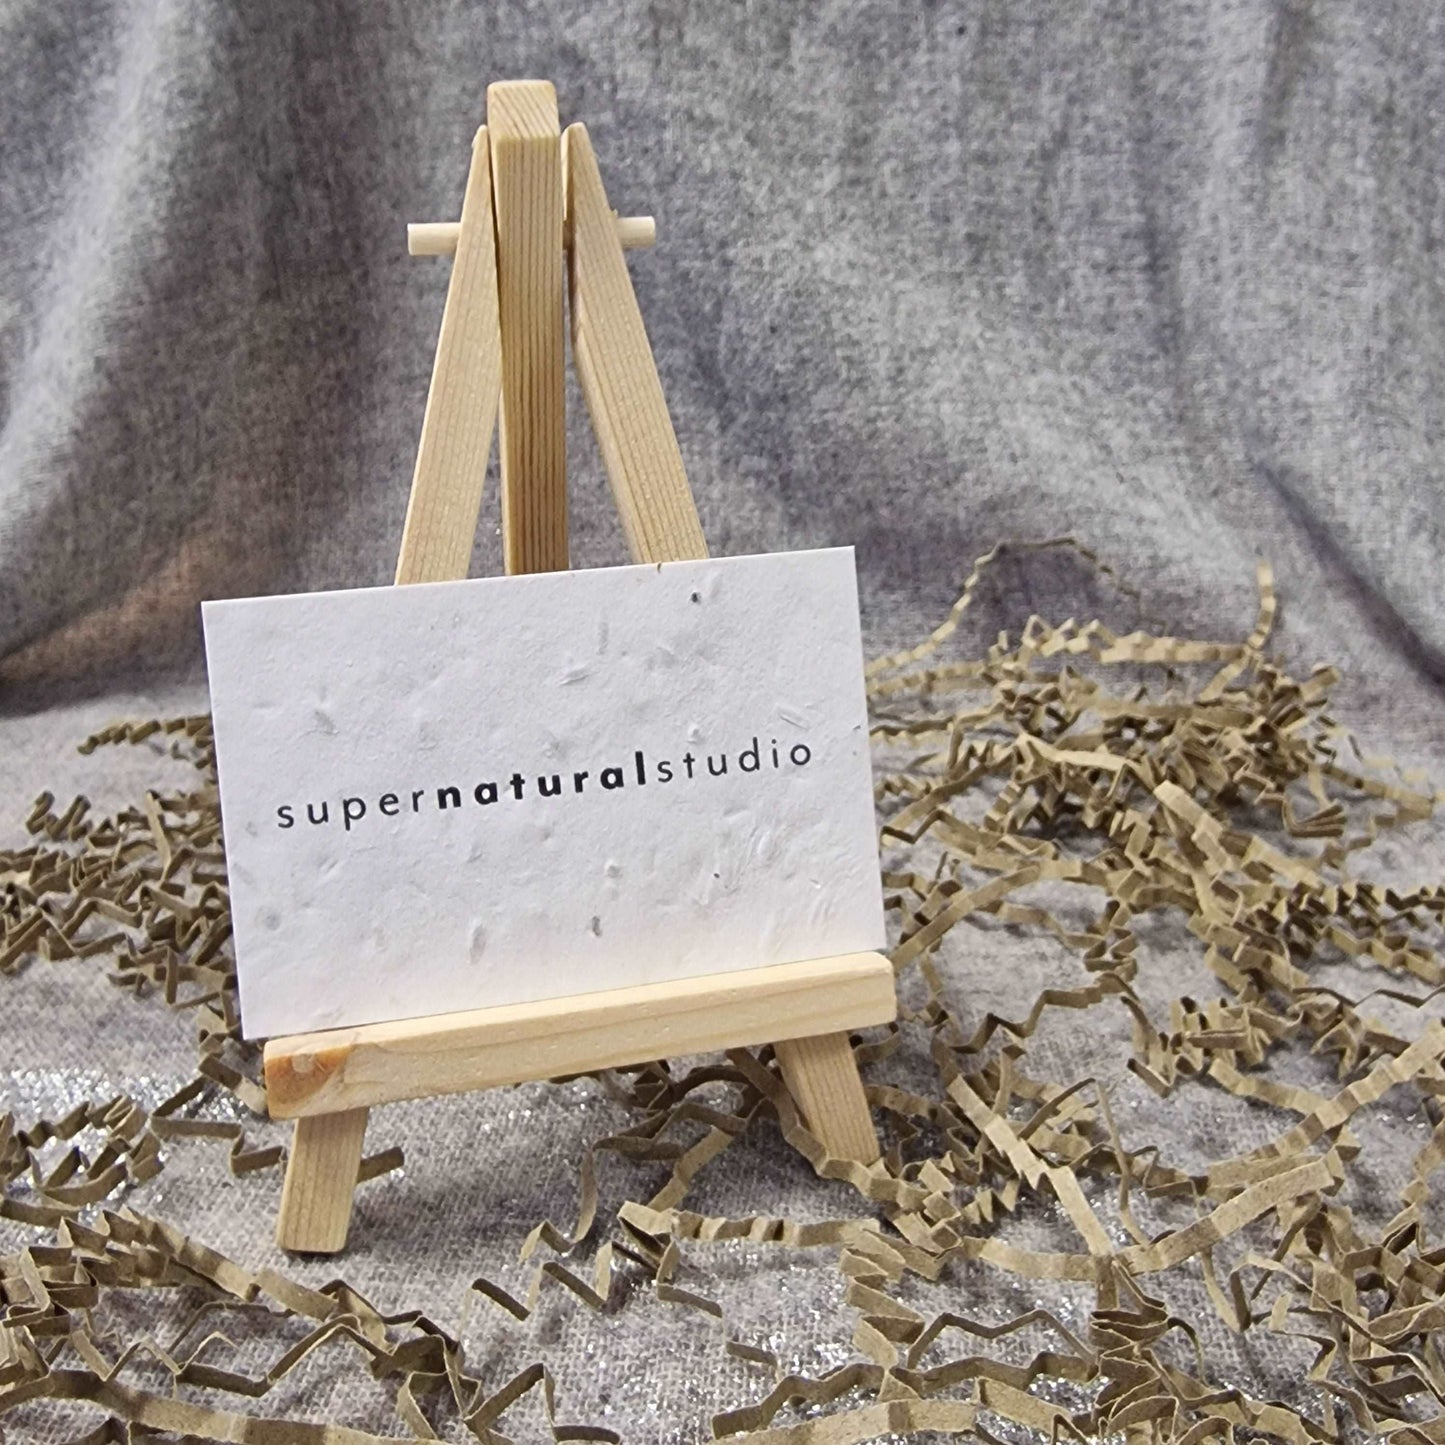 Plantable Seed Paper Business Cards - Botanical Sketch  Little Green Paper Shop